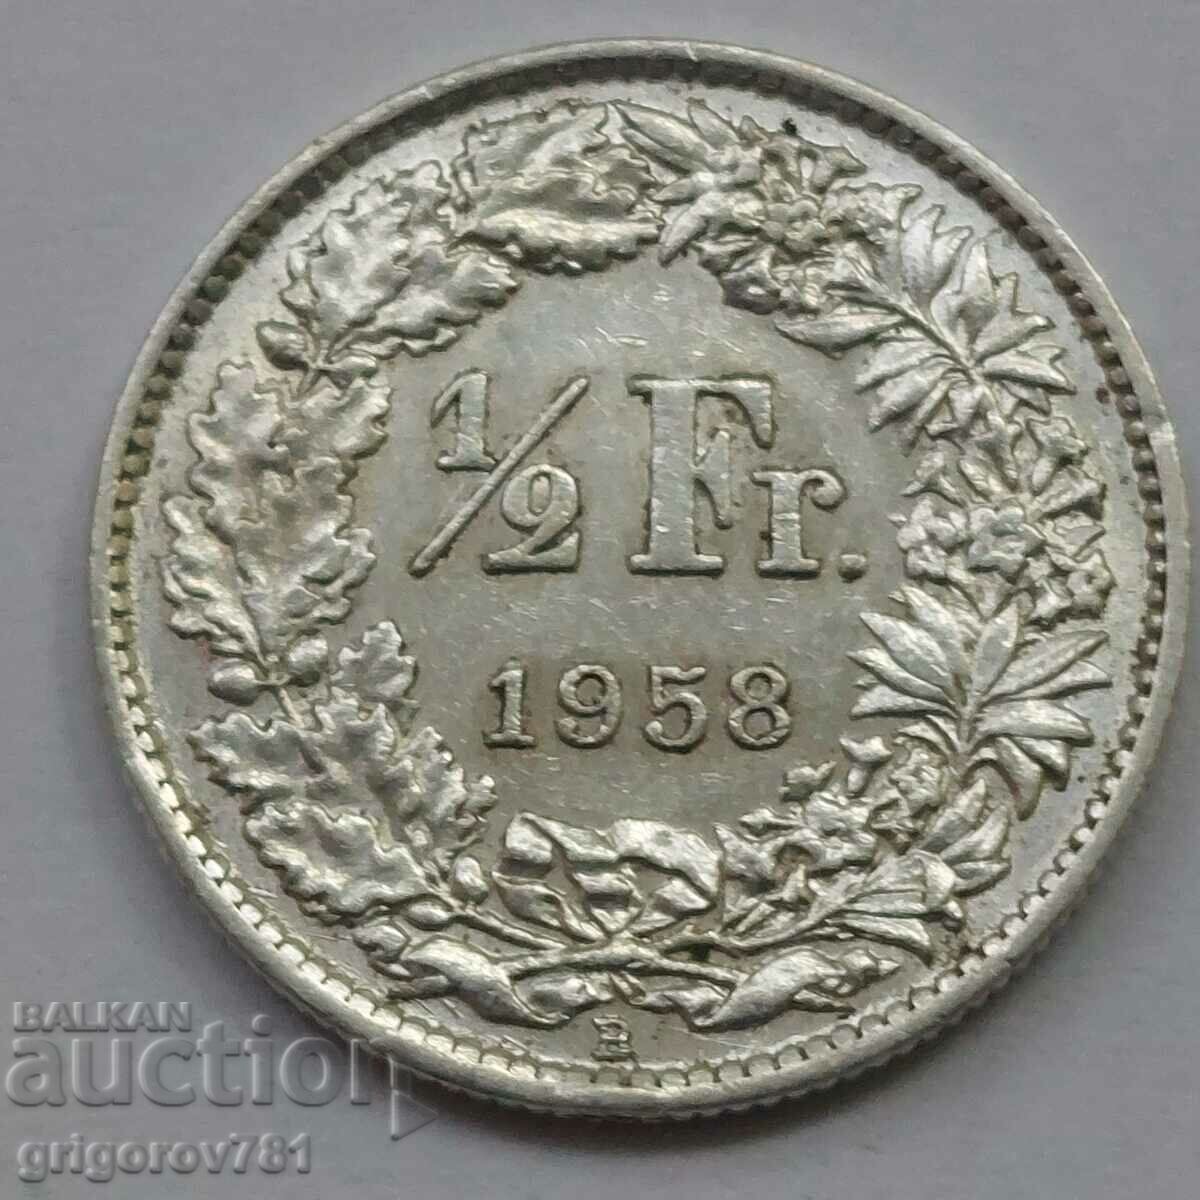 1/2 Franc Silver Switzerland 1958 B - Silver Coin #155